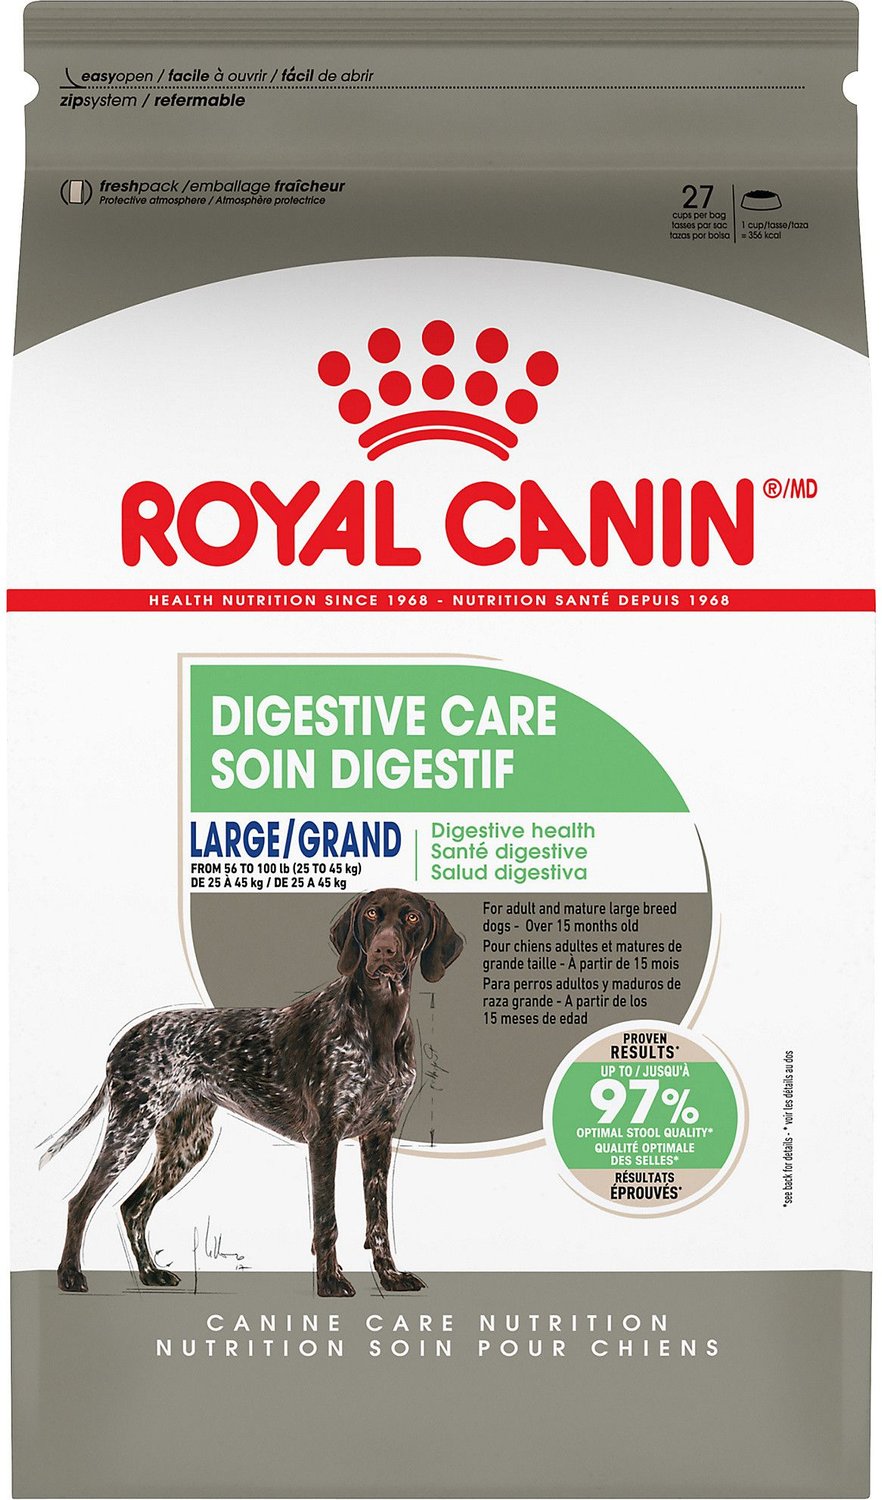 royal canin sensitive dry dog food